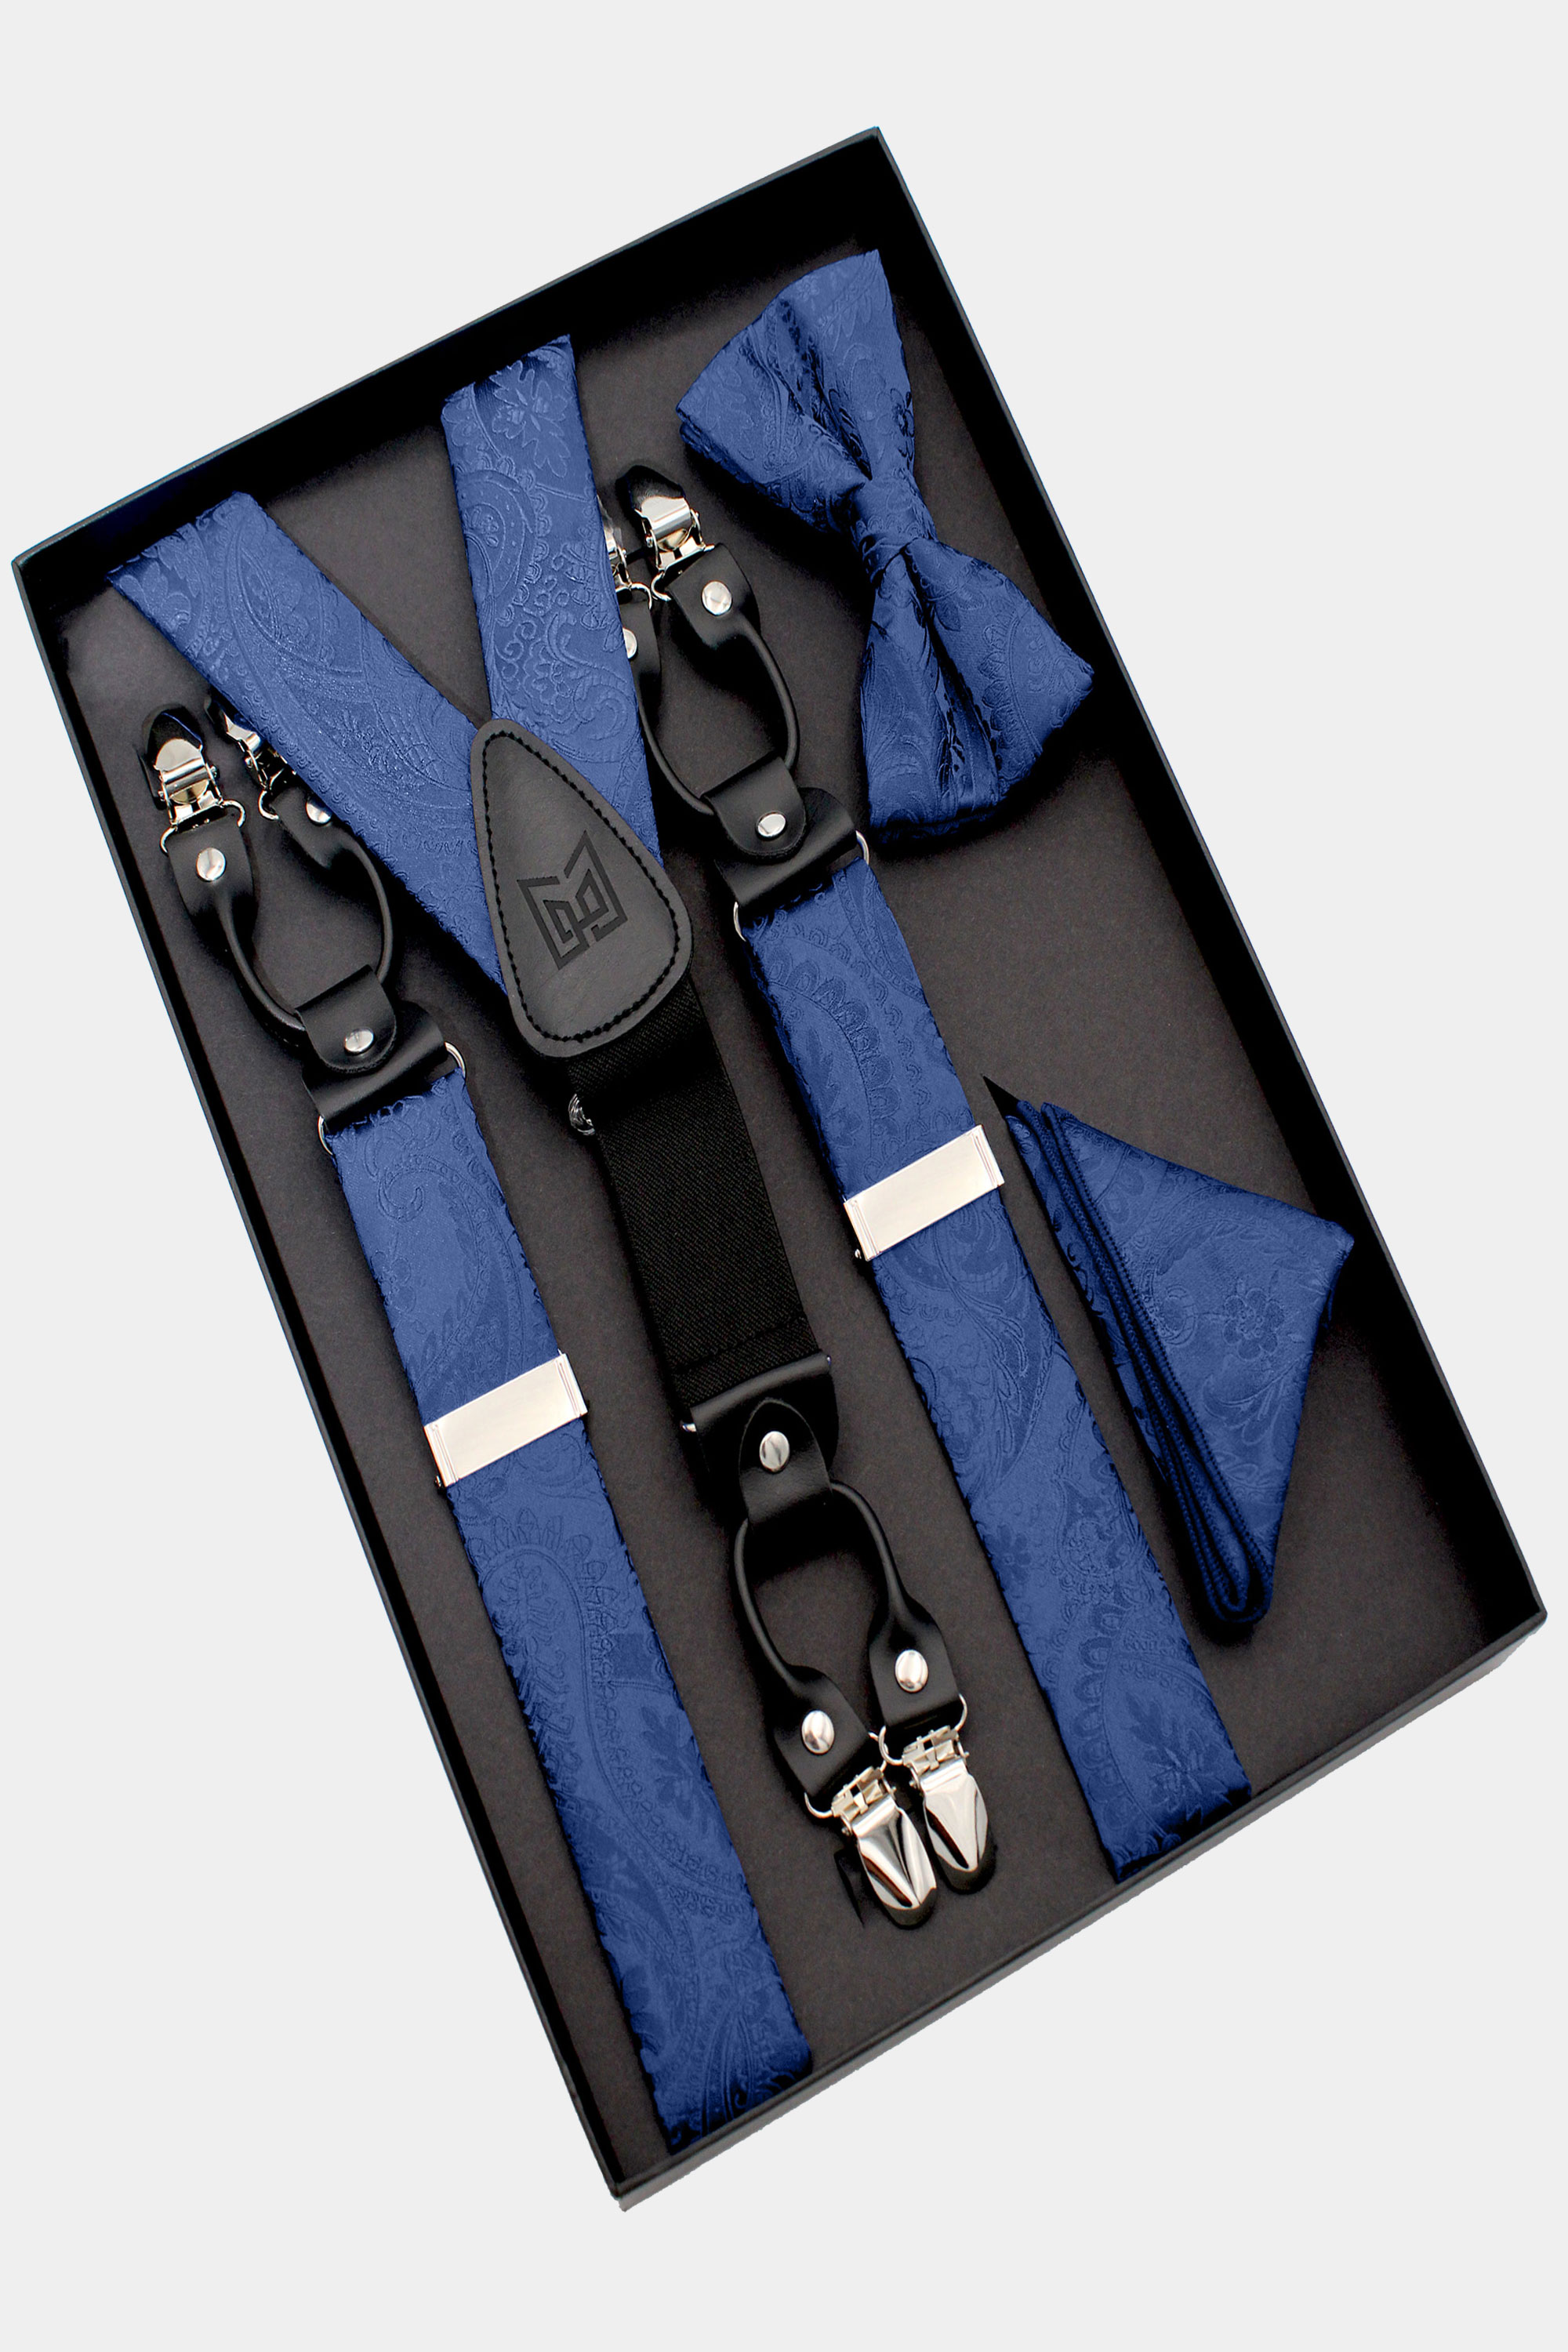 Navy-Blue-Bow-Tie-and-Suspenders-Set-Groomsmen-Wedding-Prom-from-Gentlemansguru.com